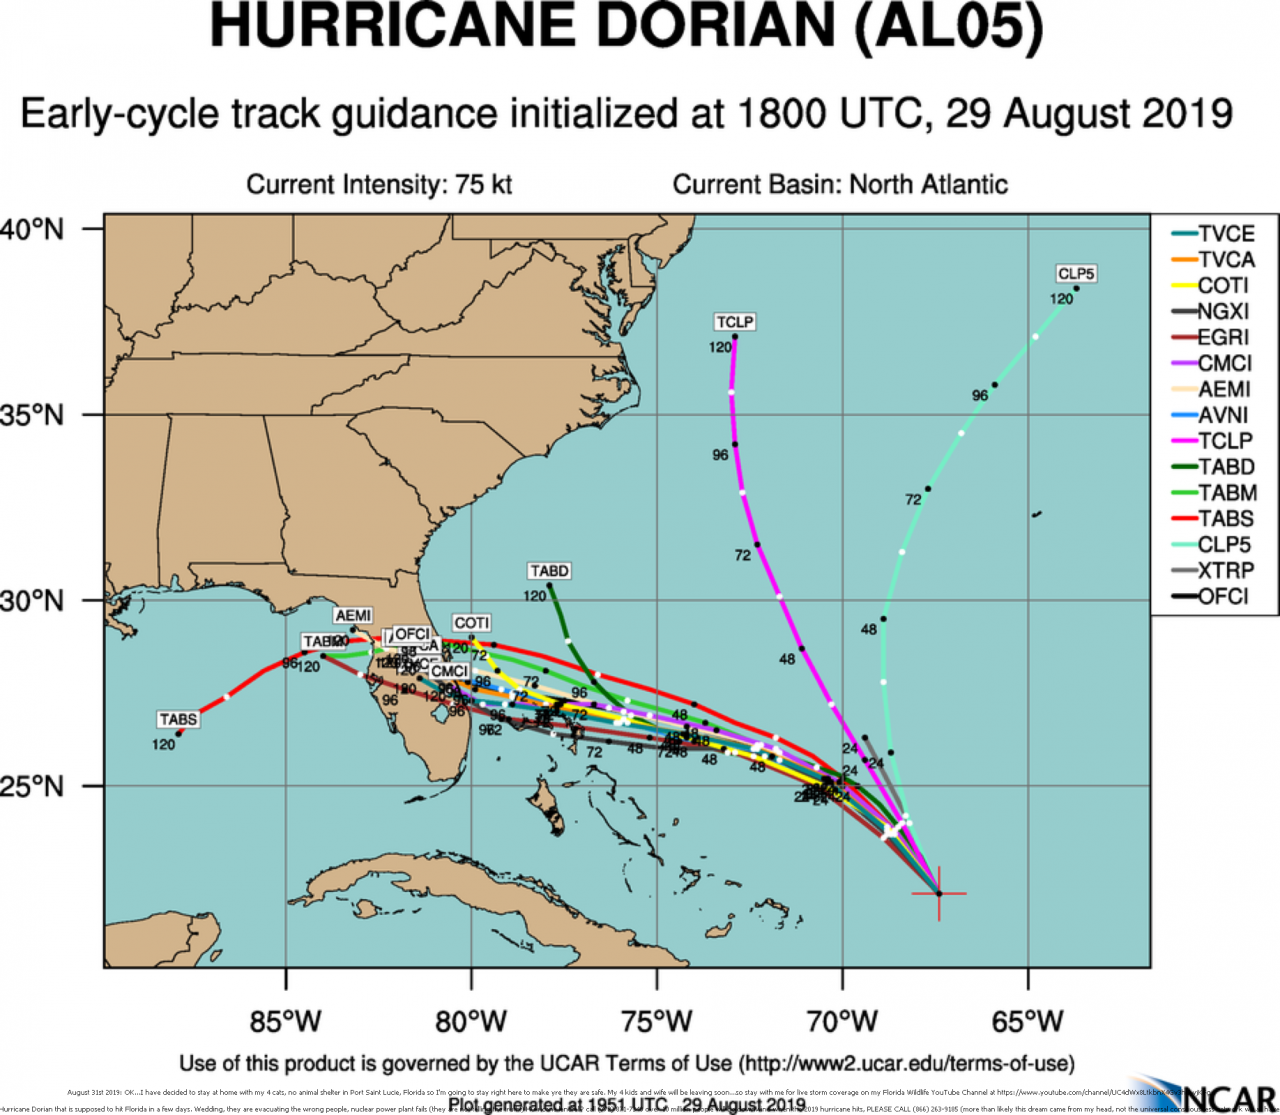 Hurricane Dorian Aug 2019 prediction by Psychic Brian Ladd aal05 2019082918 track early
Hurricane Dorian Aug 2019 prediction by Psychic Brian Ladd aal05 2019082918 track early
